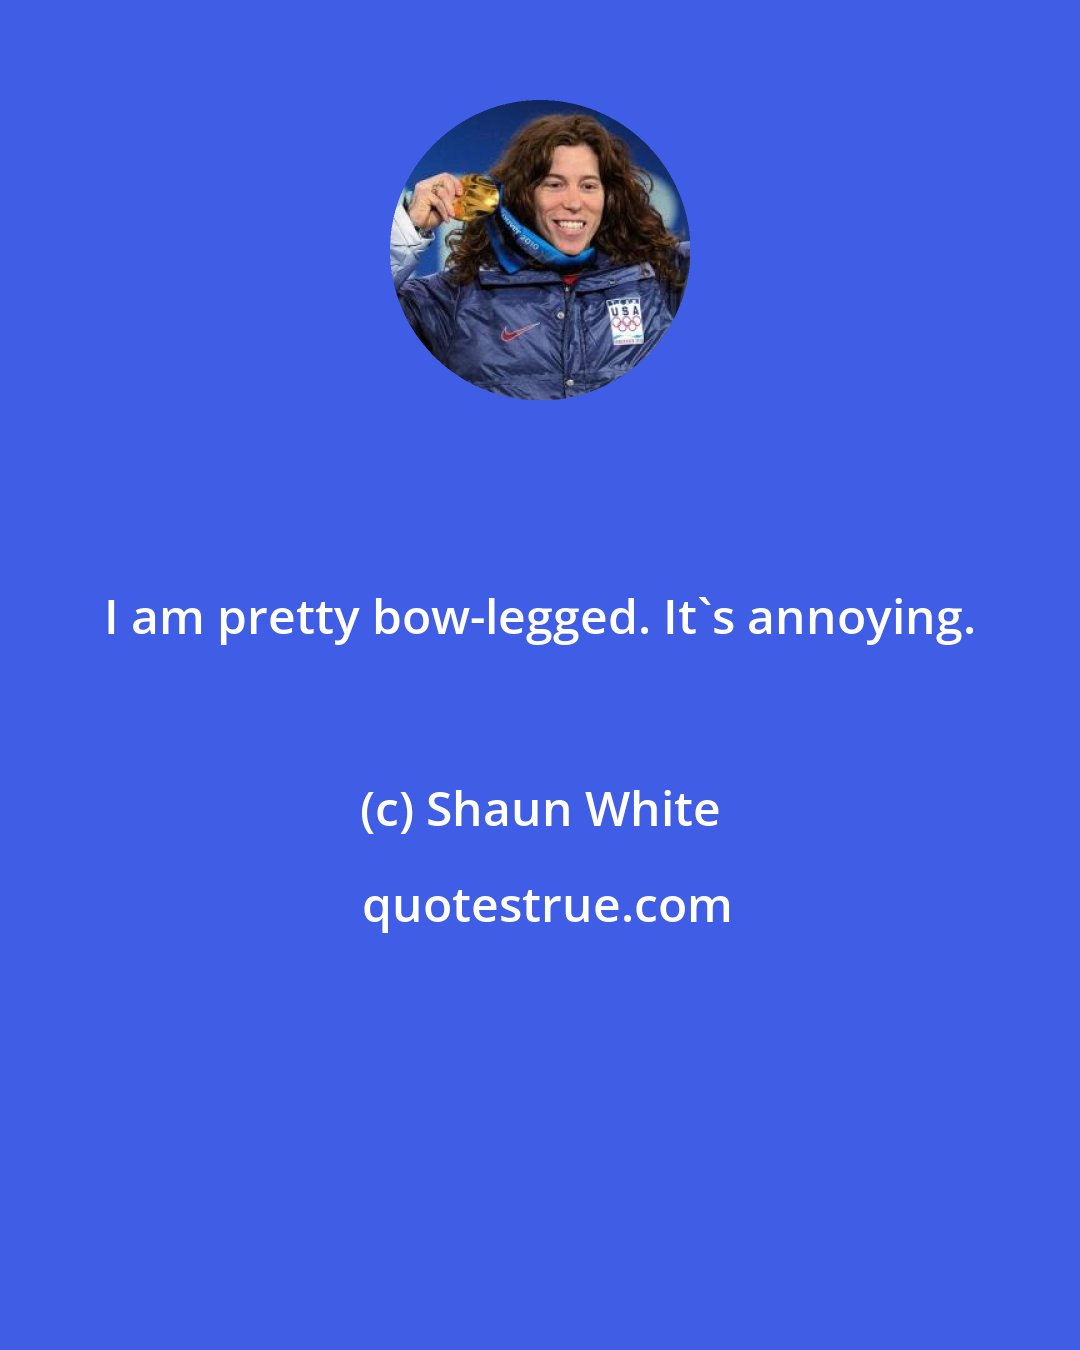 Shaun White: I am pretty bow-legged. It's annoying.